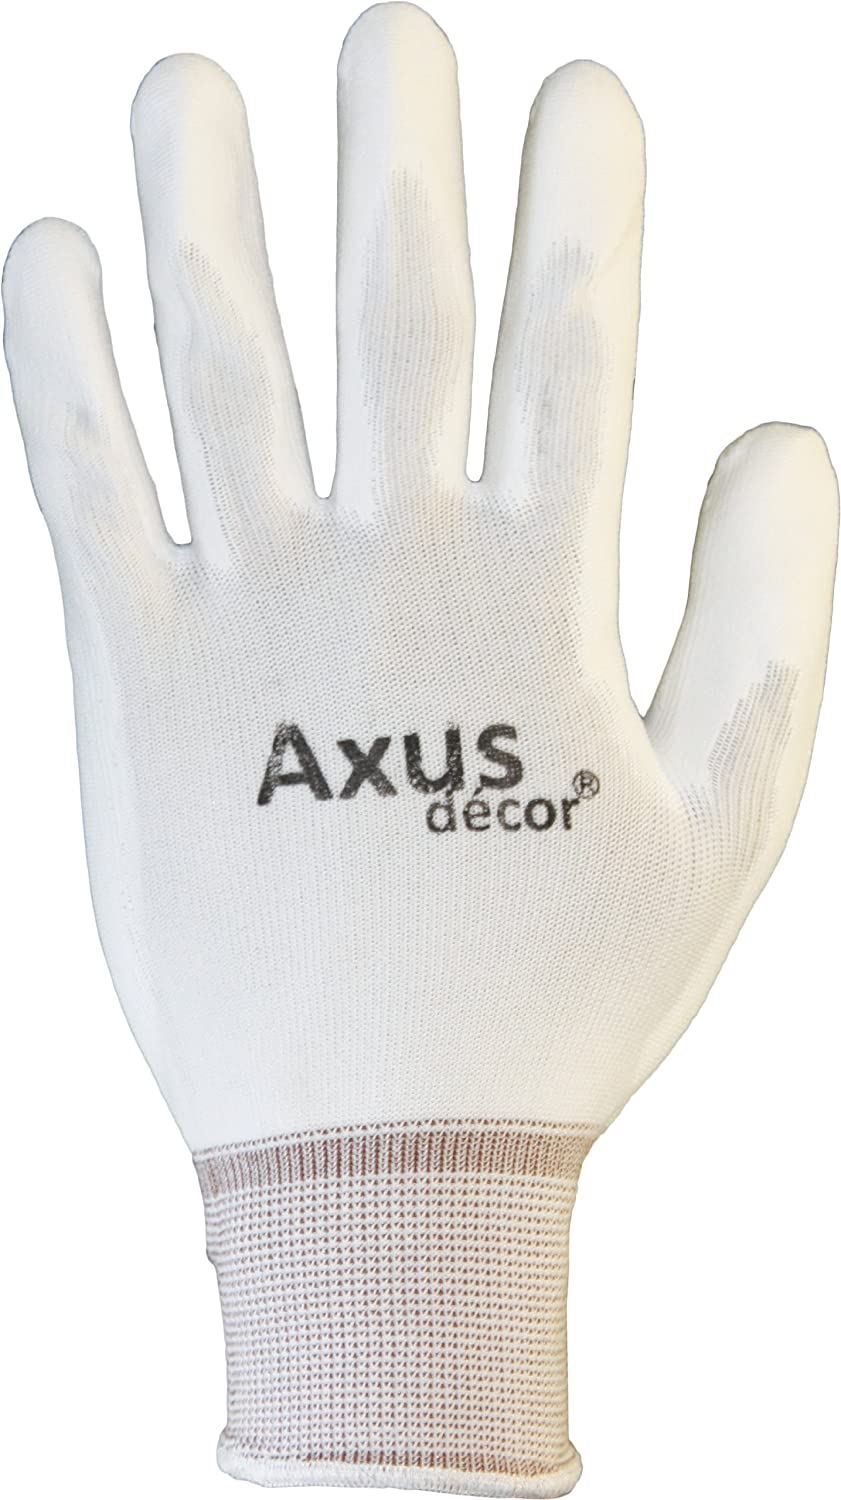 Axus Decor White Painter's Gloves Large (3 Pairs)